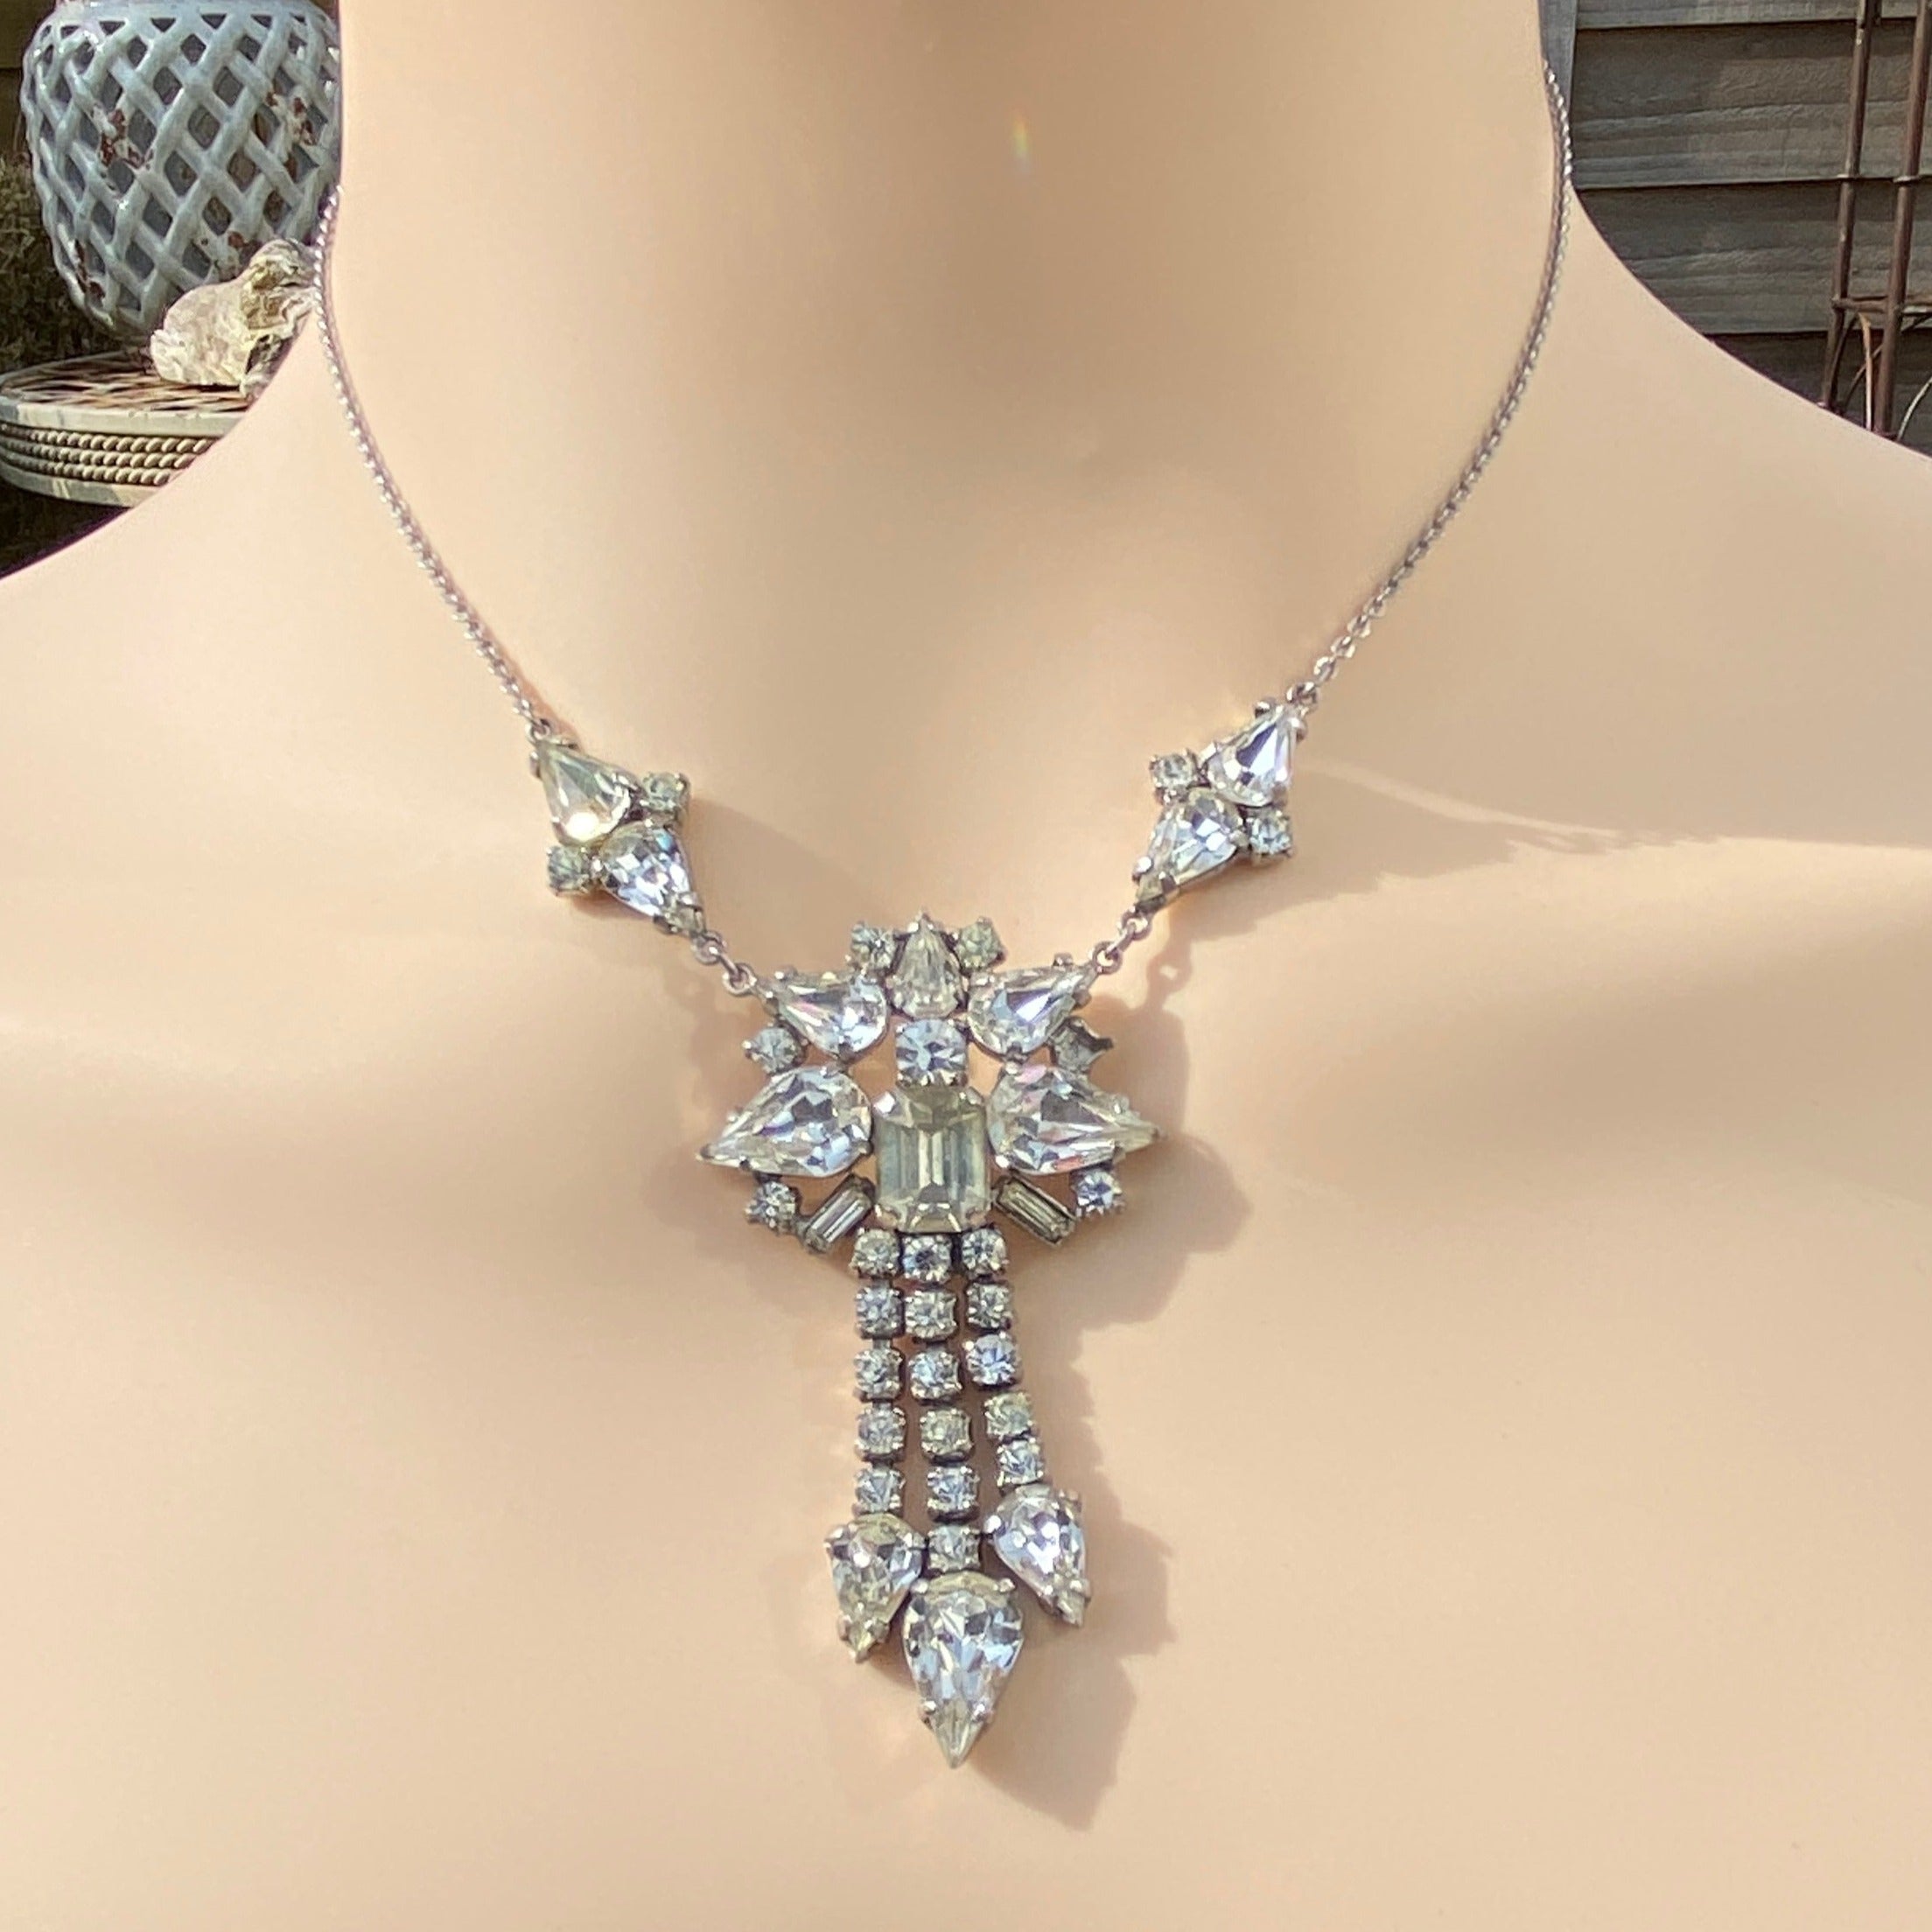 Vintage Rhinestone Prom/ Cocktail Necklace.